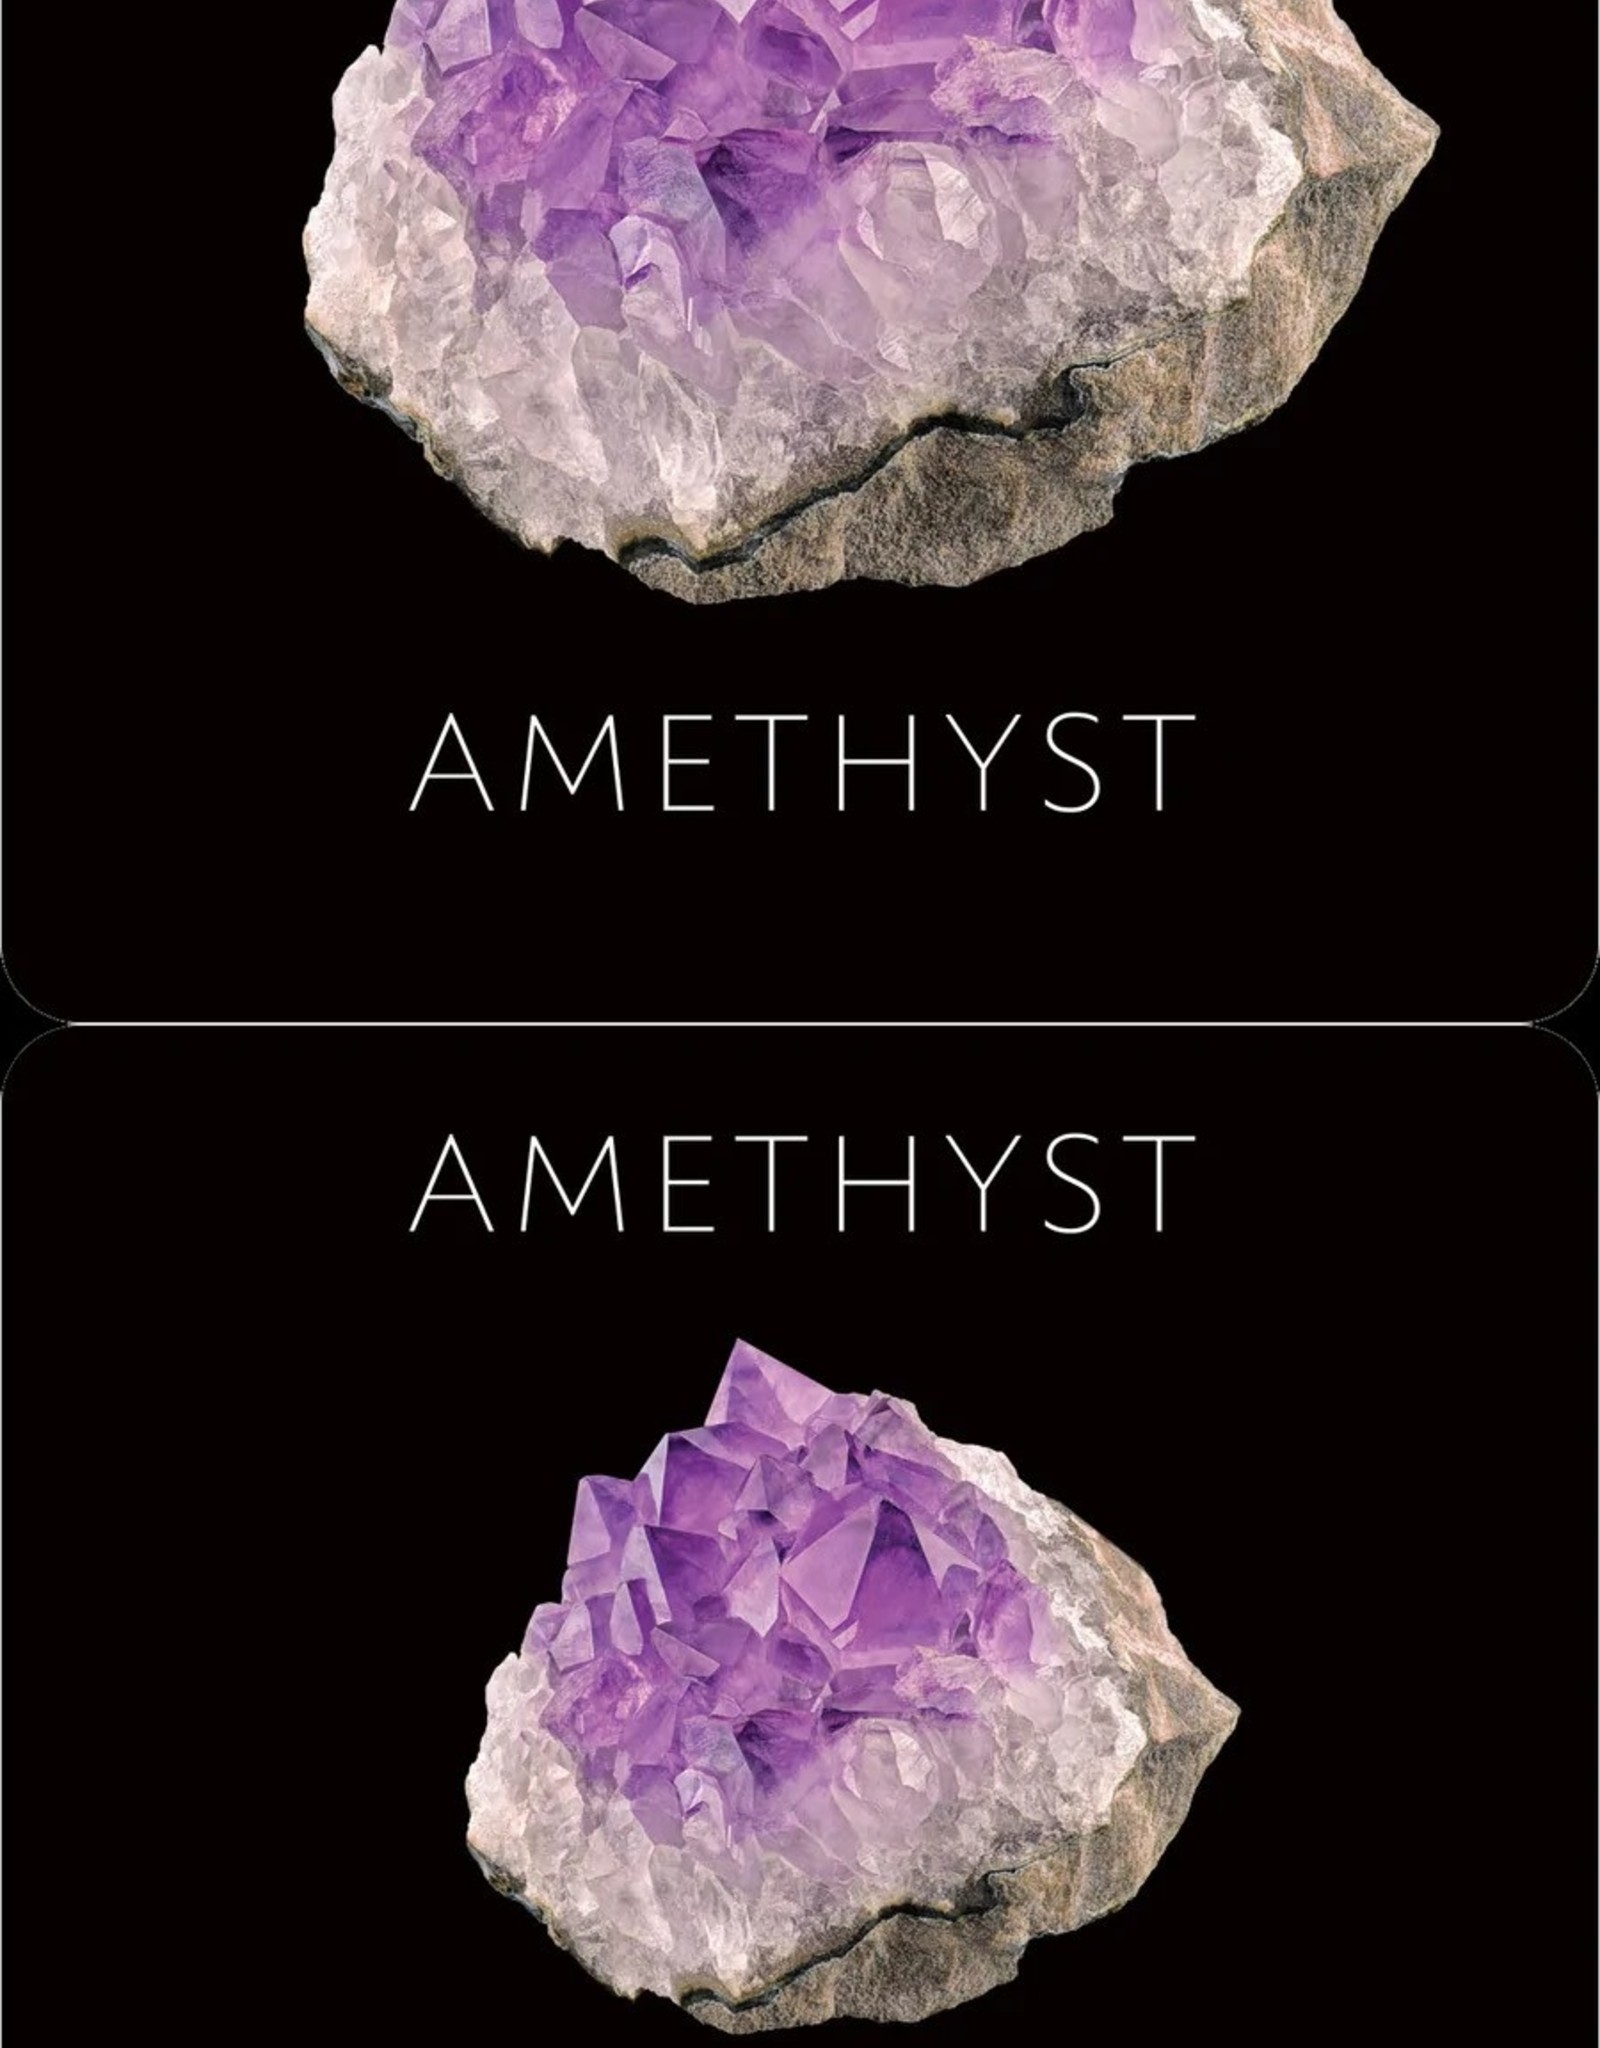 Crystals Insight Cards